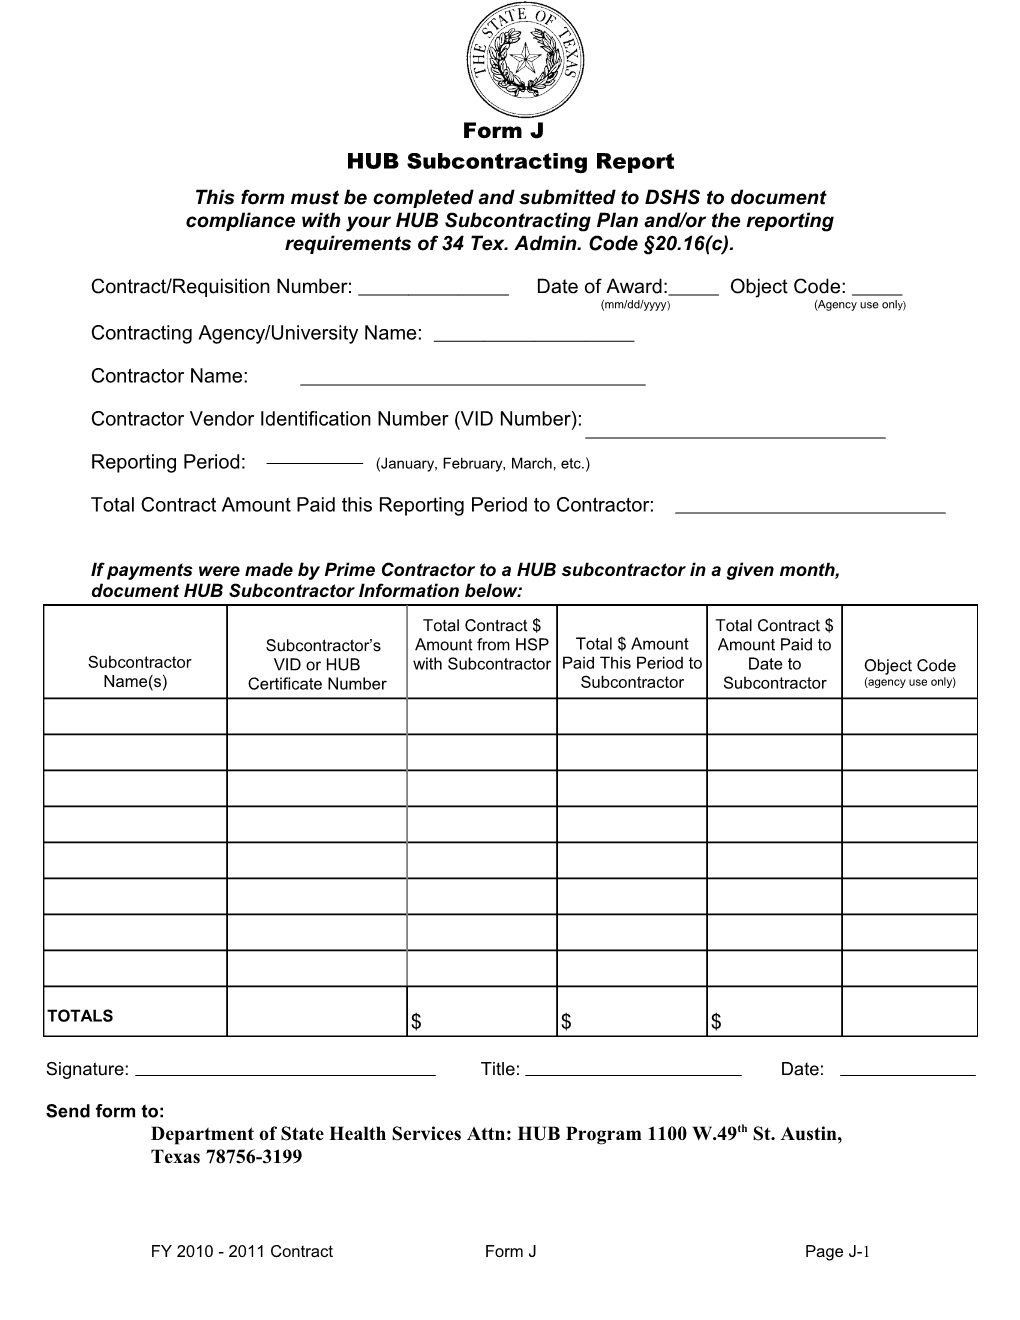 Form J HUB Subcontracting Report